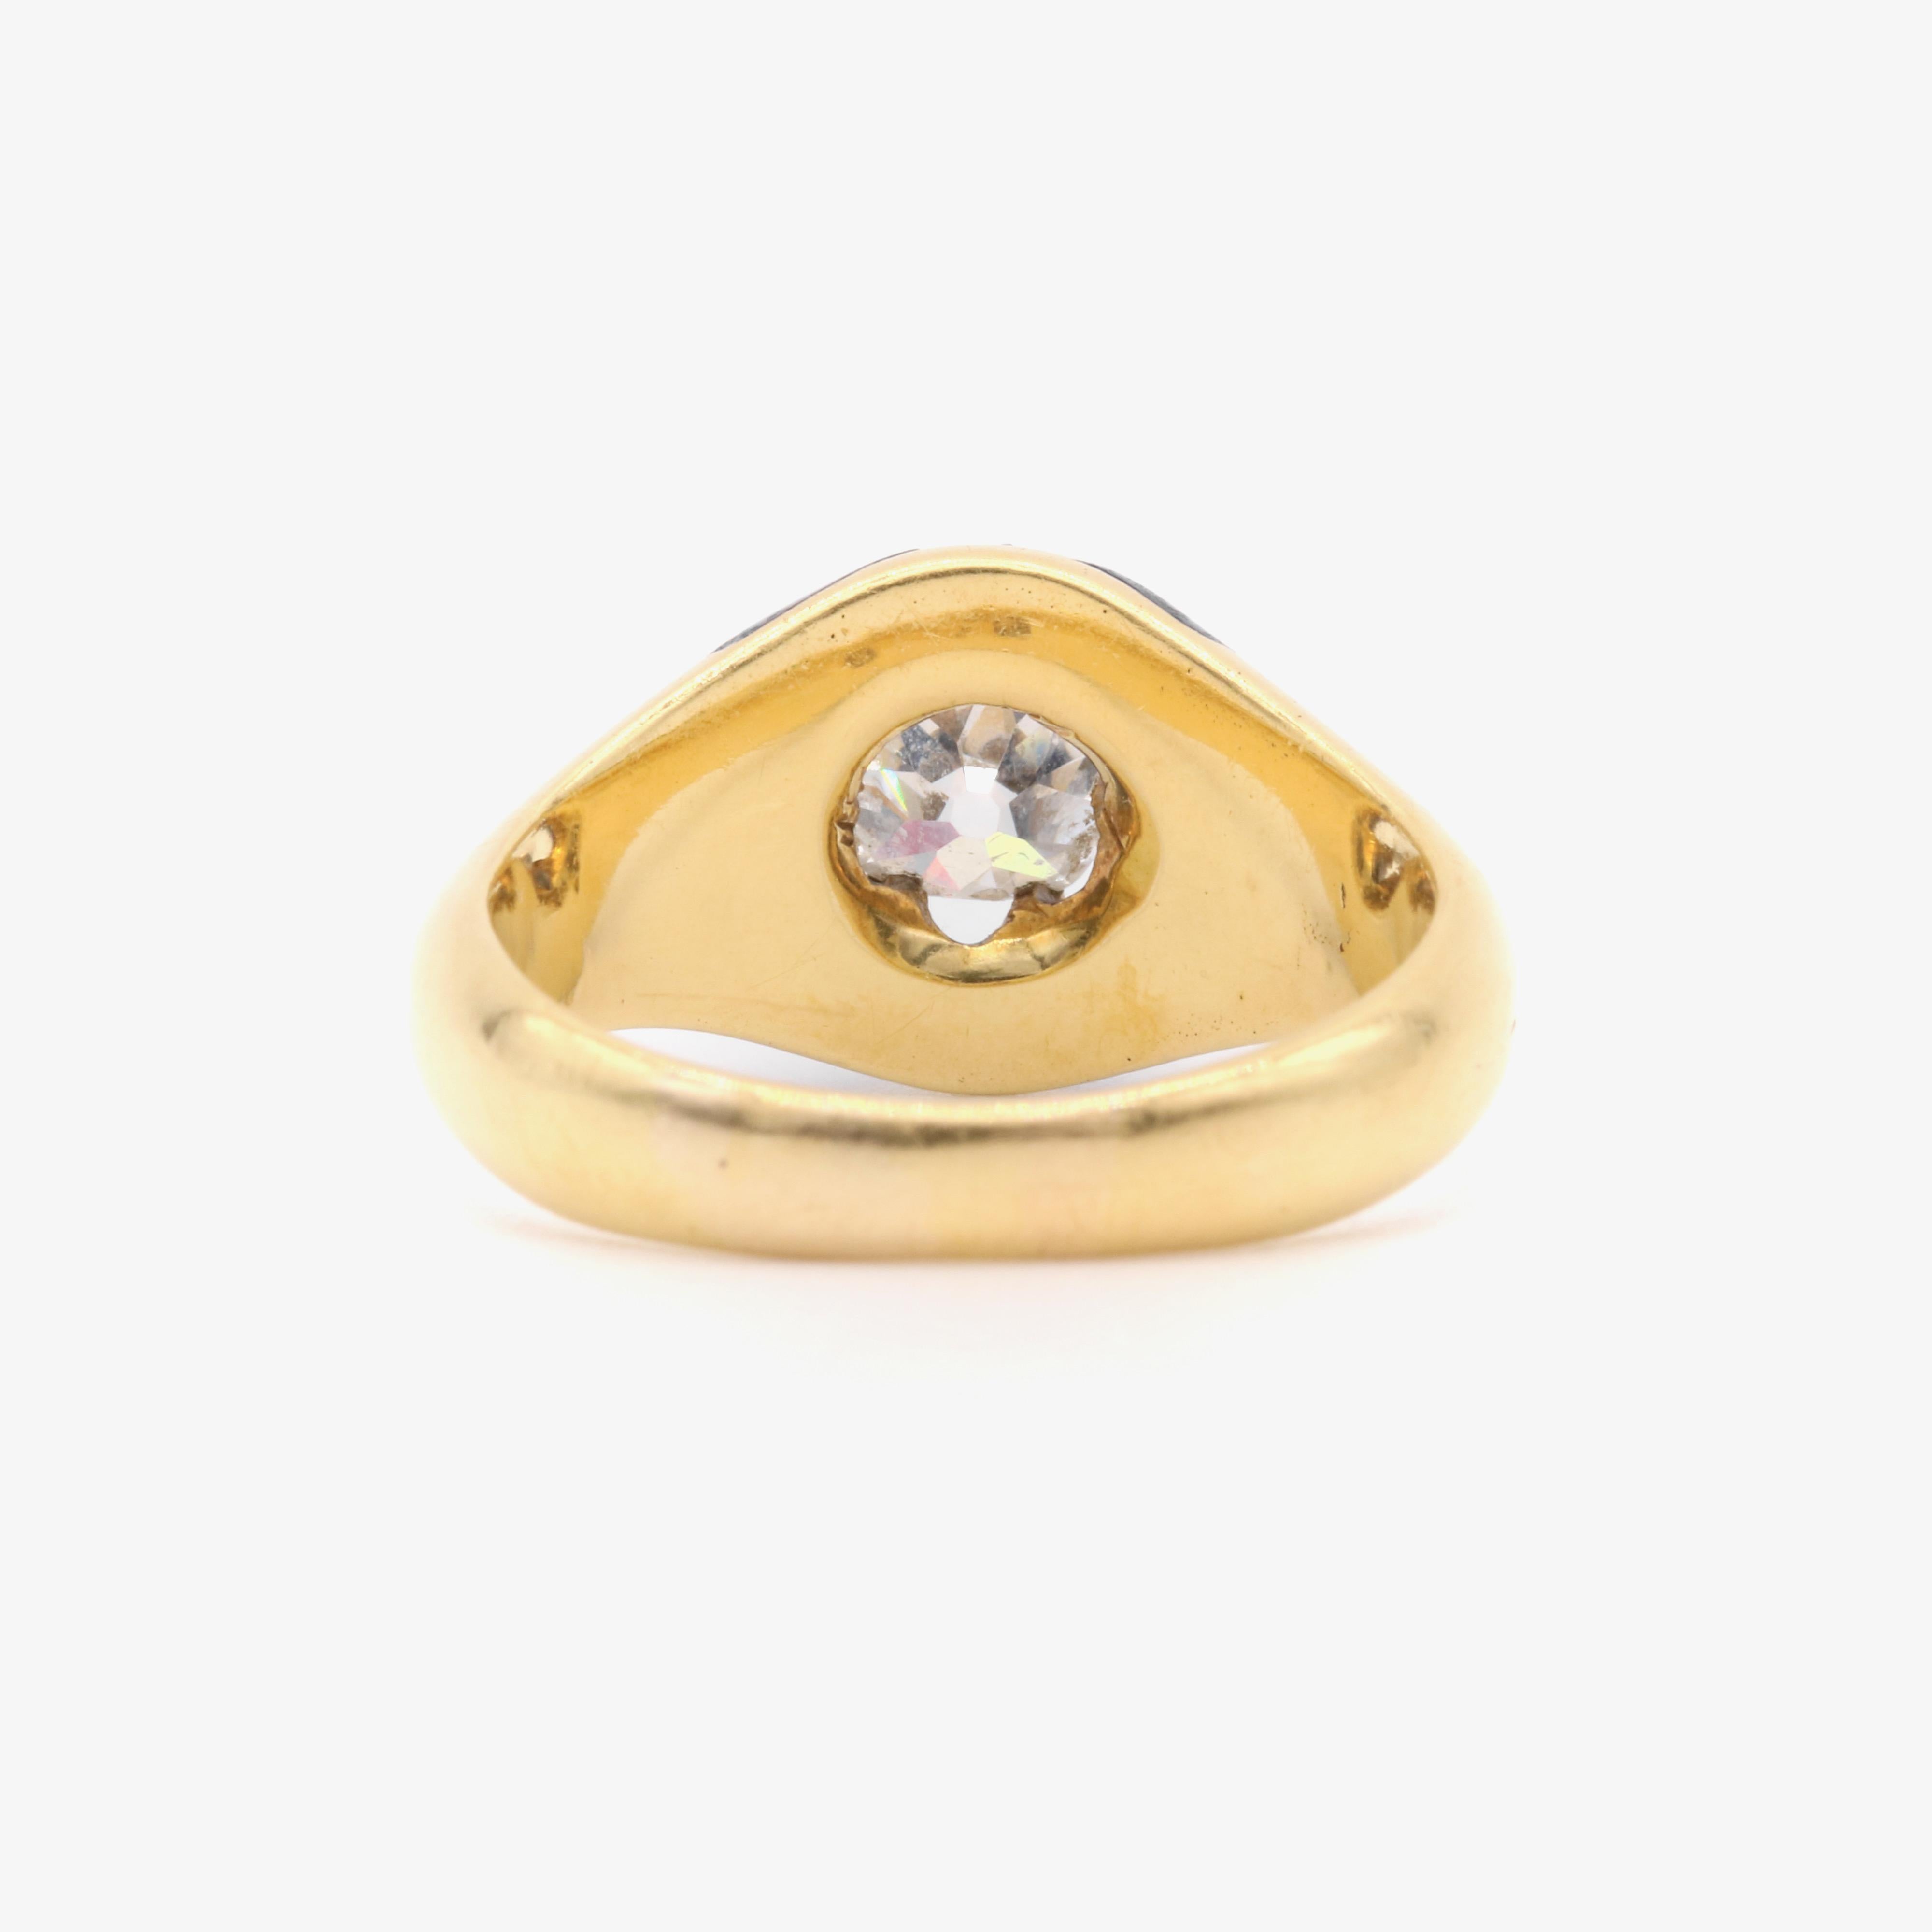 Antique Victorian 1880s 18K Gold Blue Enamel & 0.65ct Old Mine Cut Diamond Ring For Sale 1